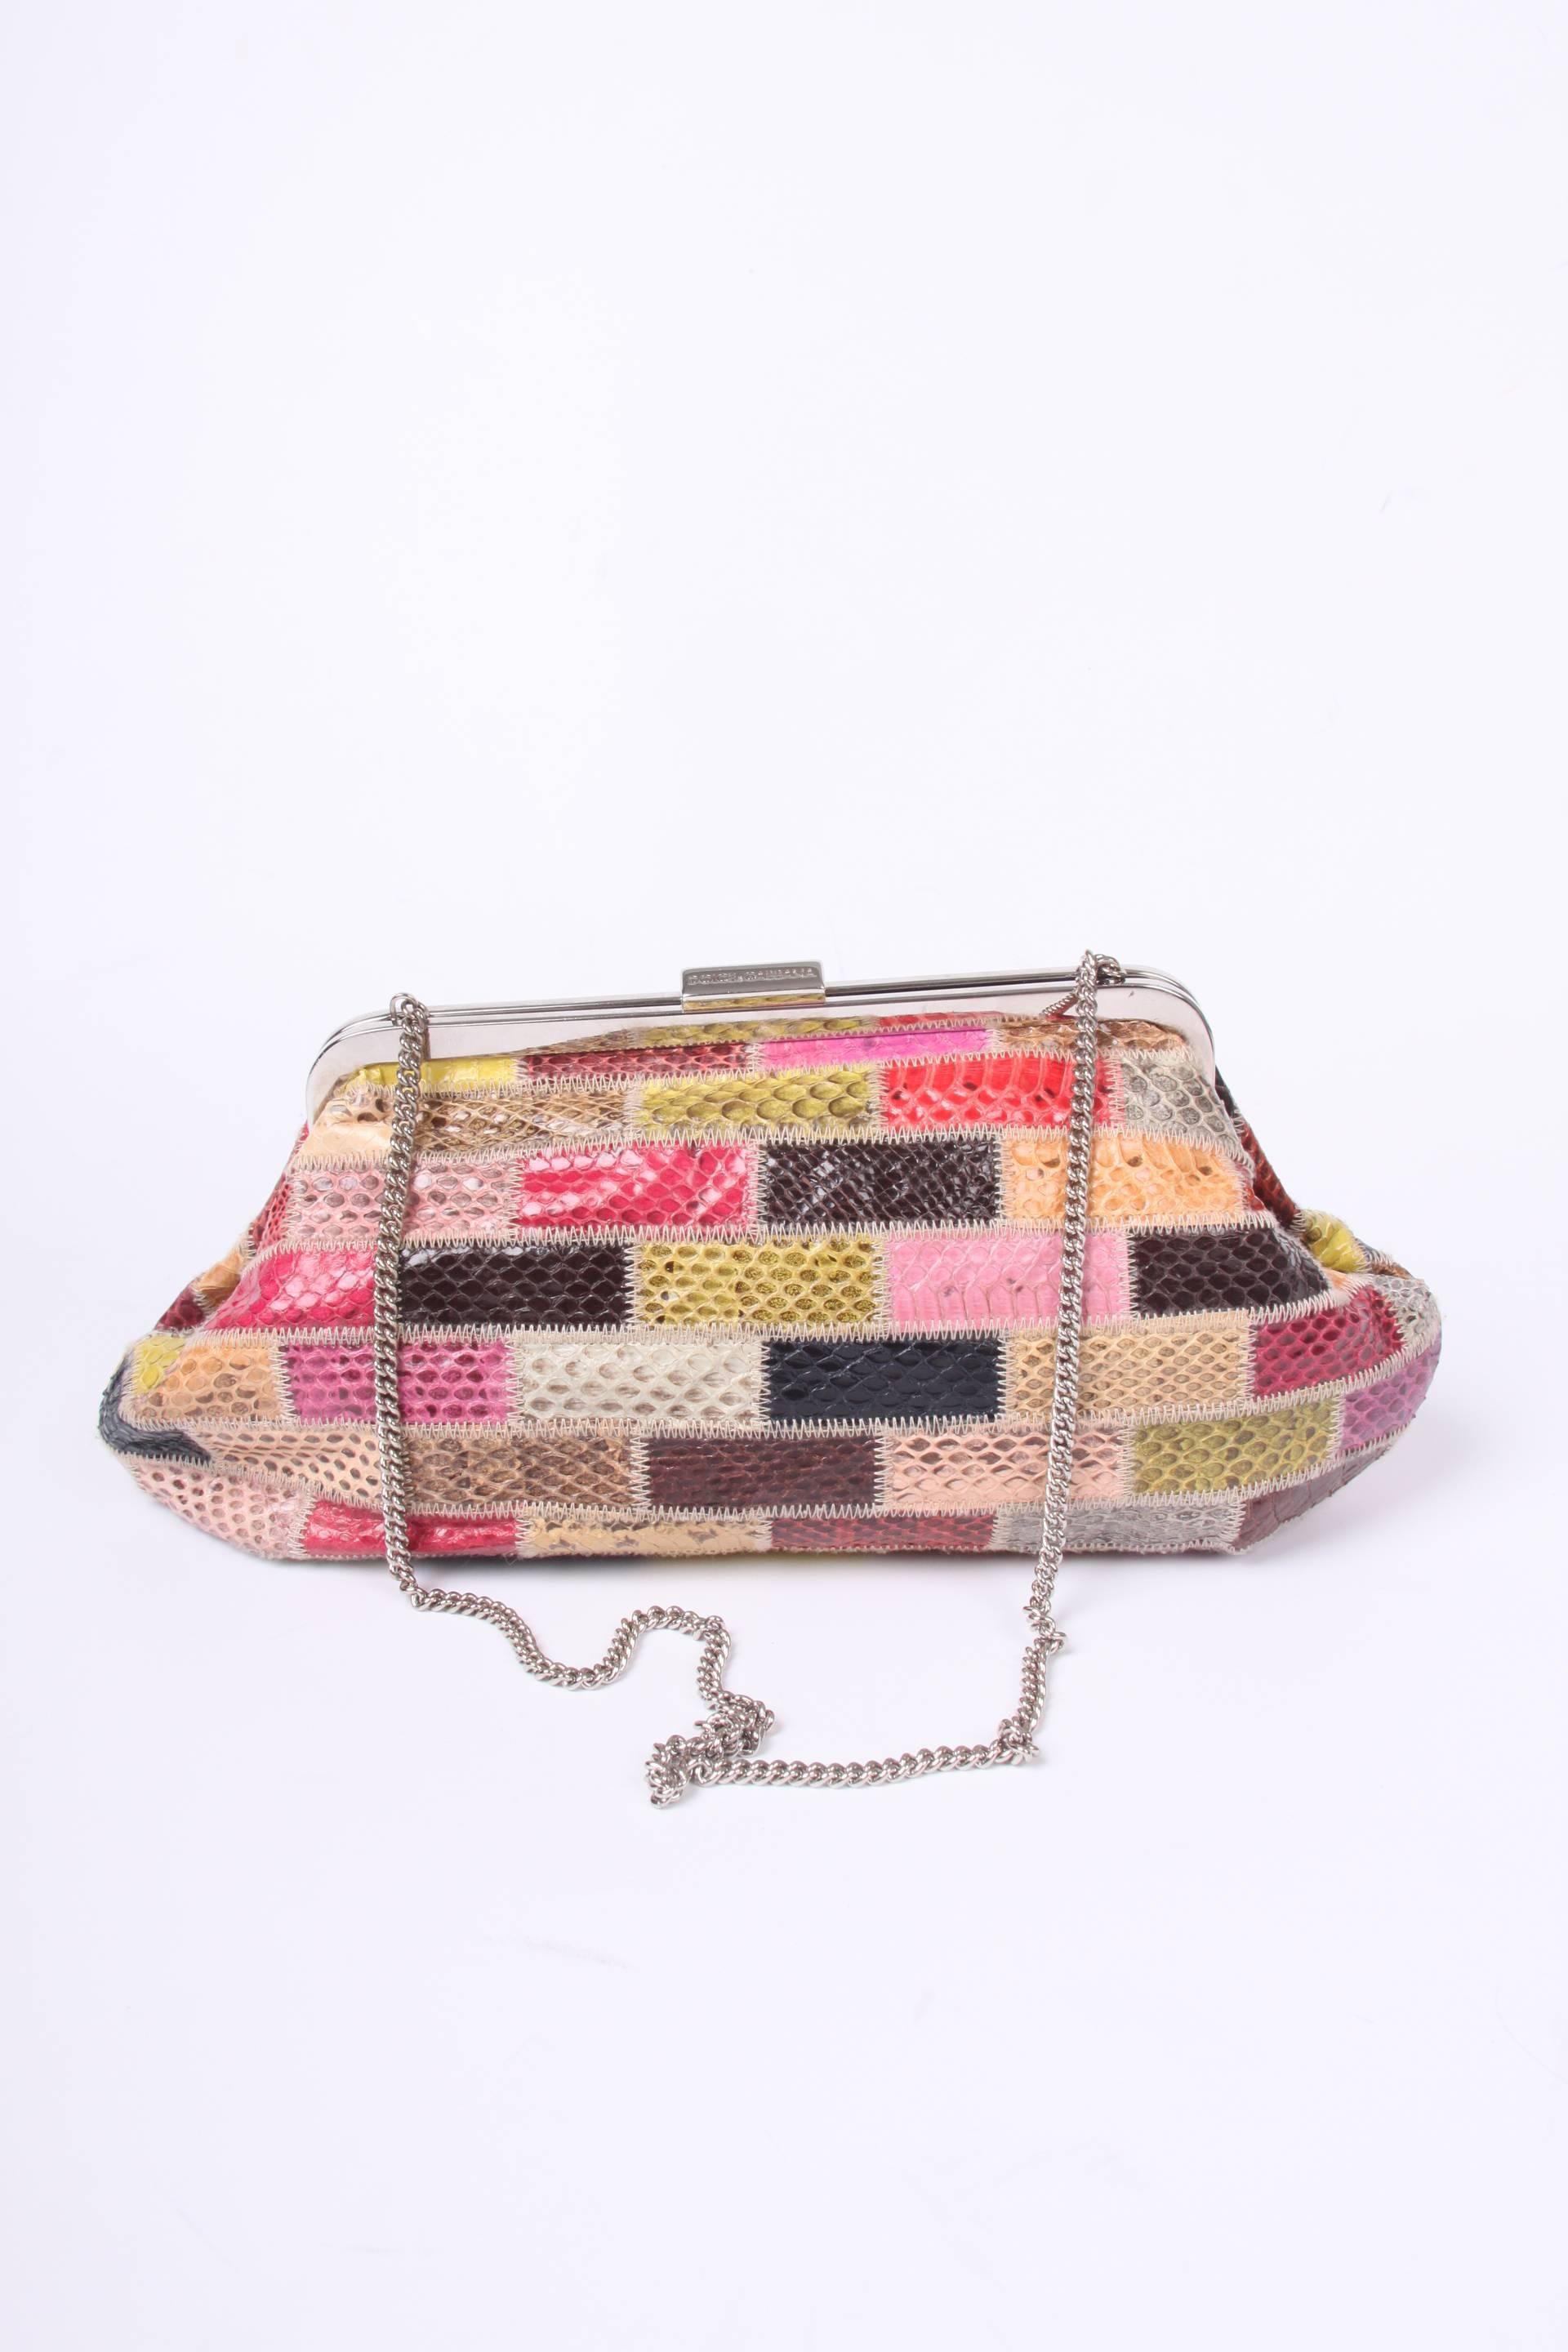 Women's  Dolce & Gabbana Python Patchwork Clutch and Belt - multi colour 